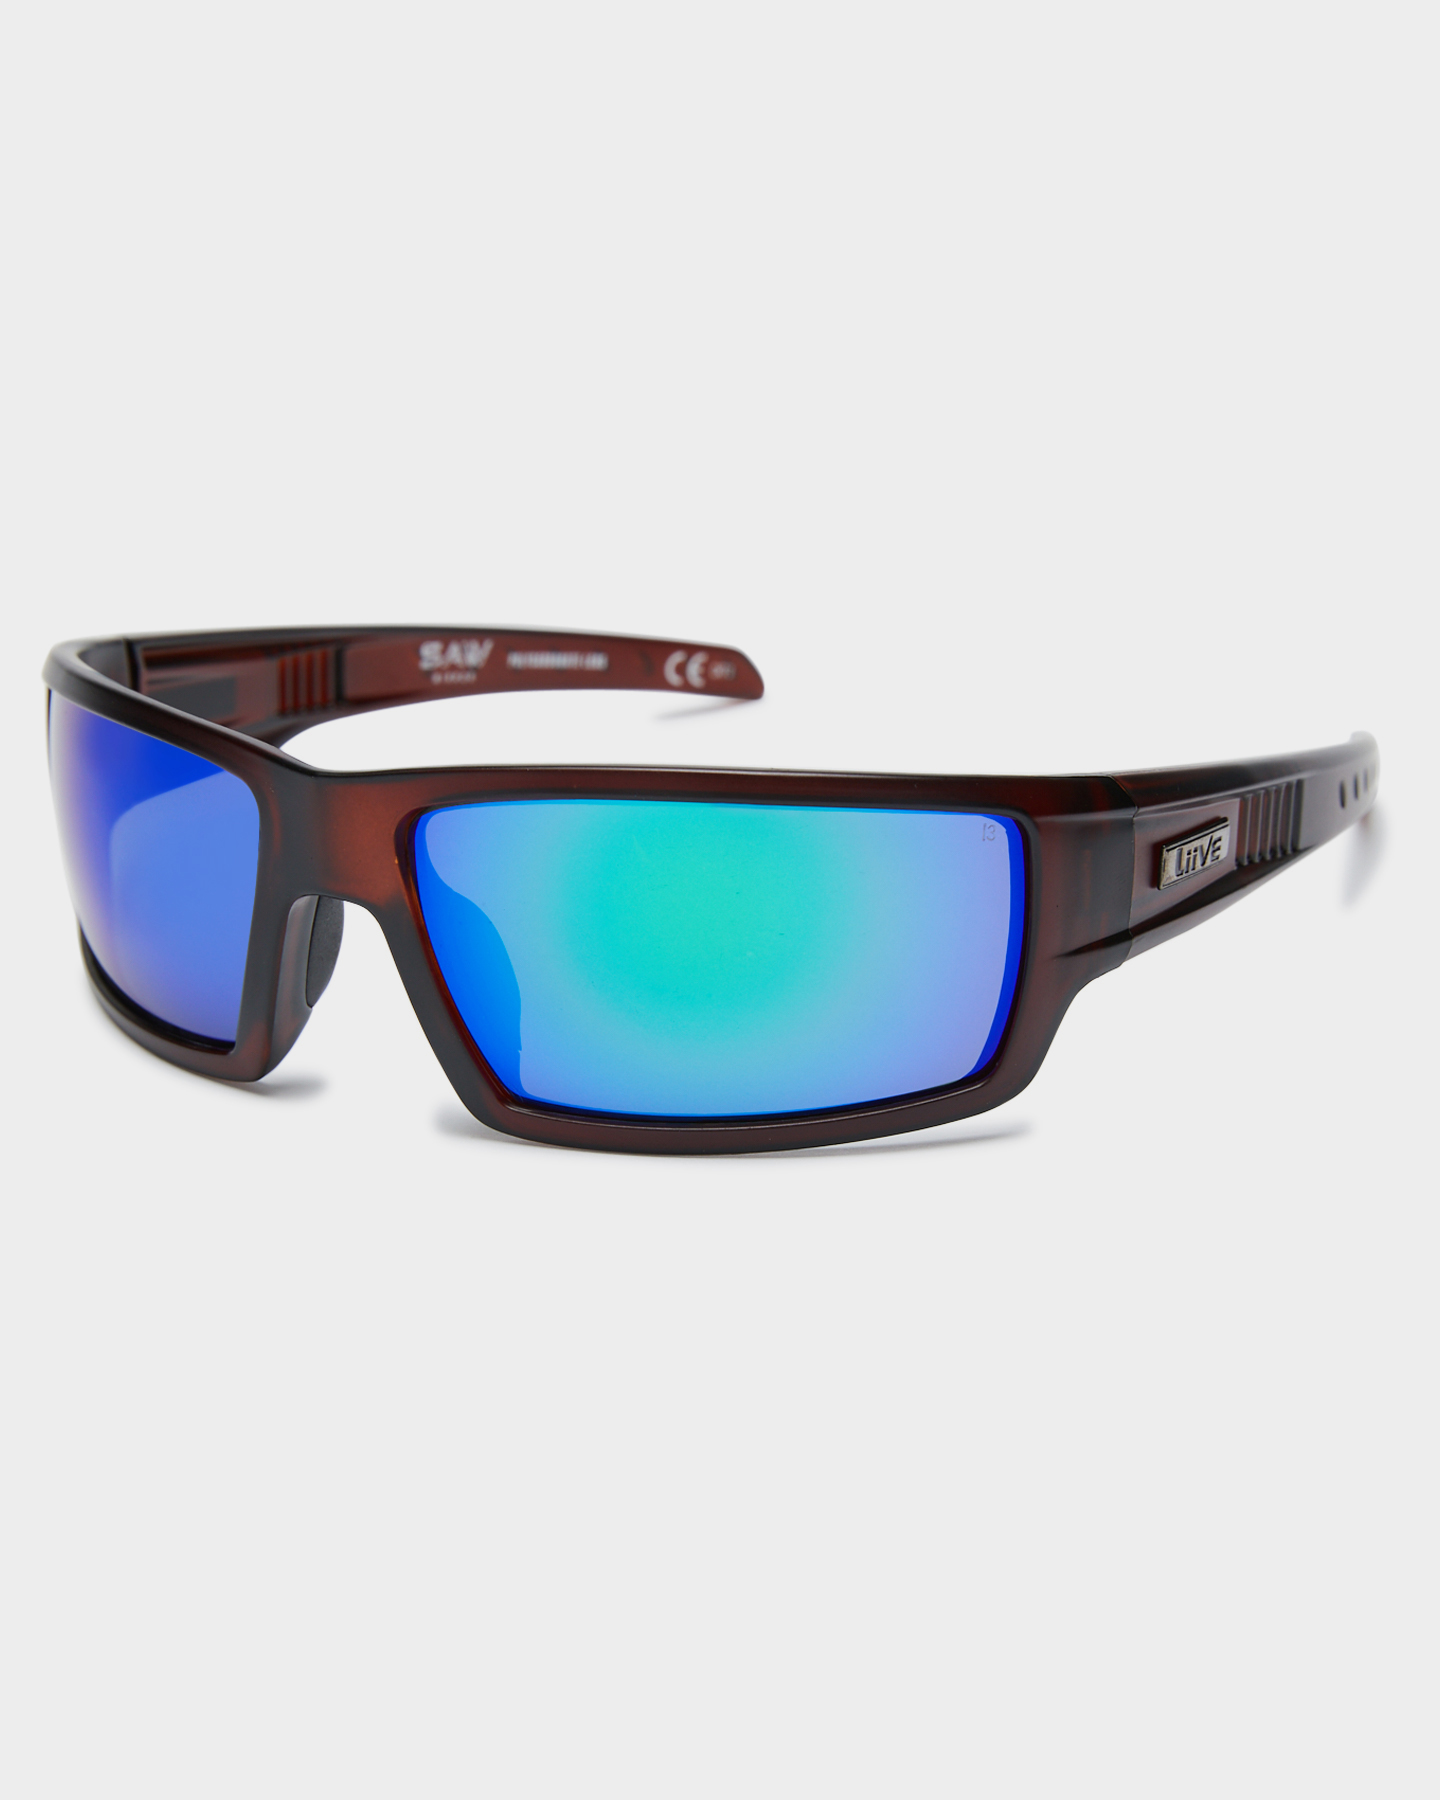 Liive Vision Saw Safety Sunglasses - Matt Xtal Beer